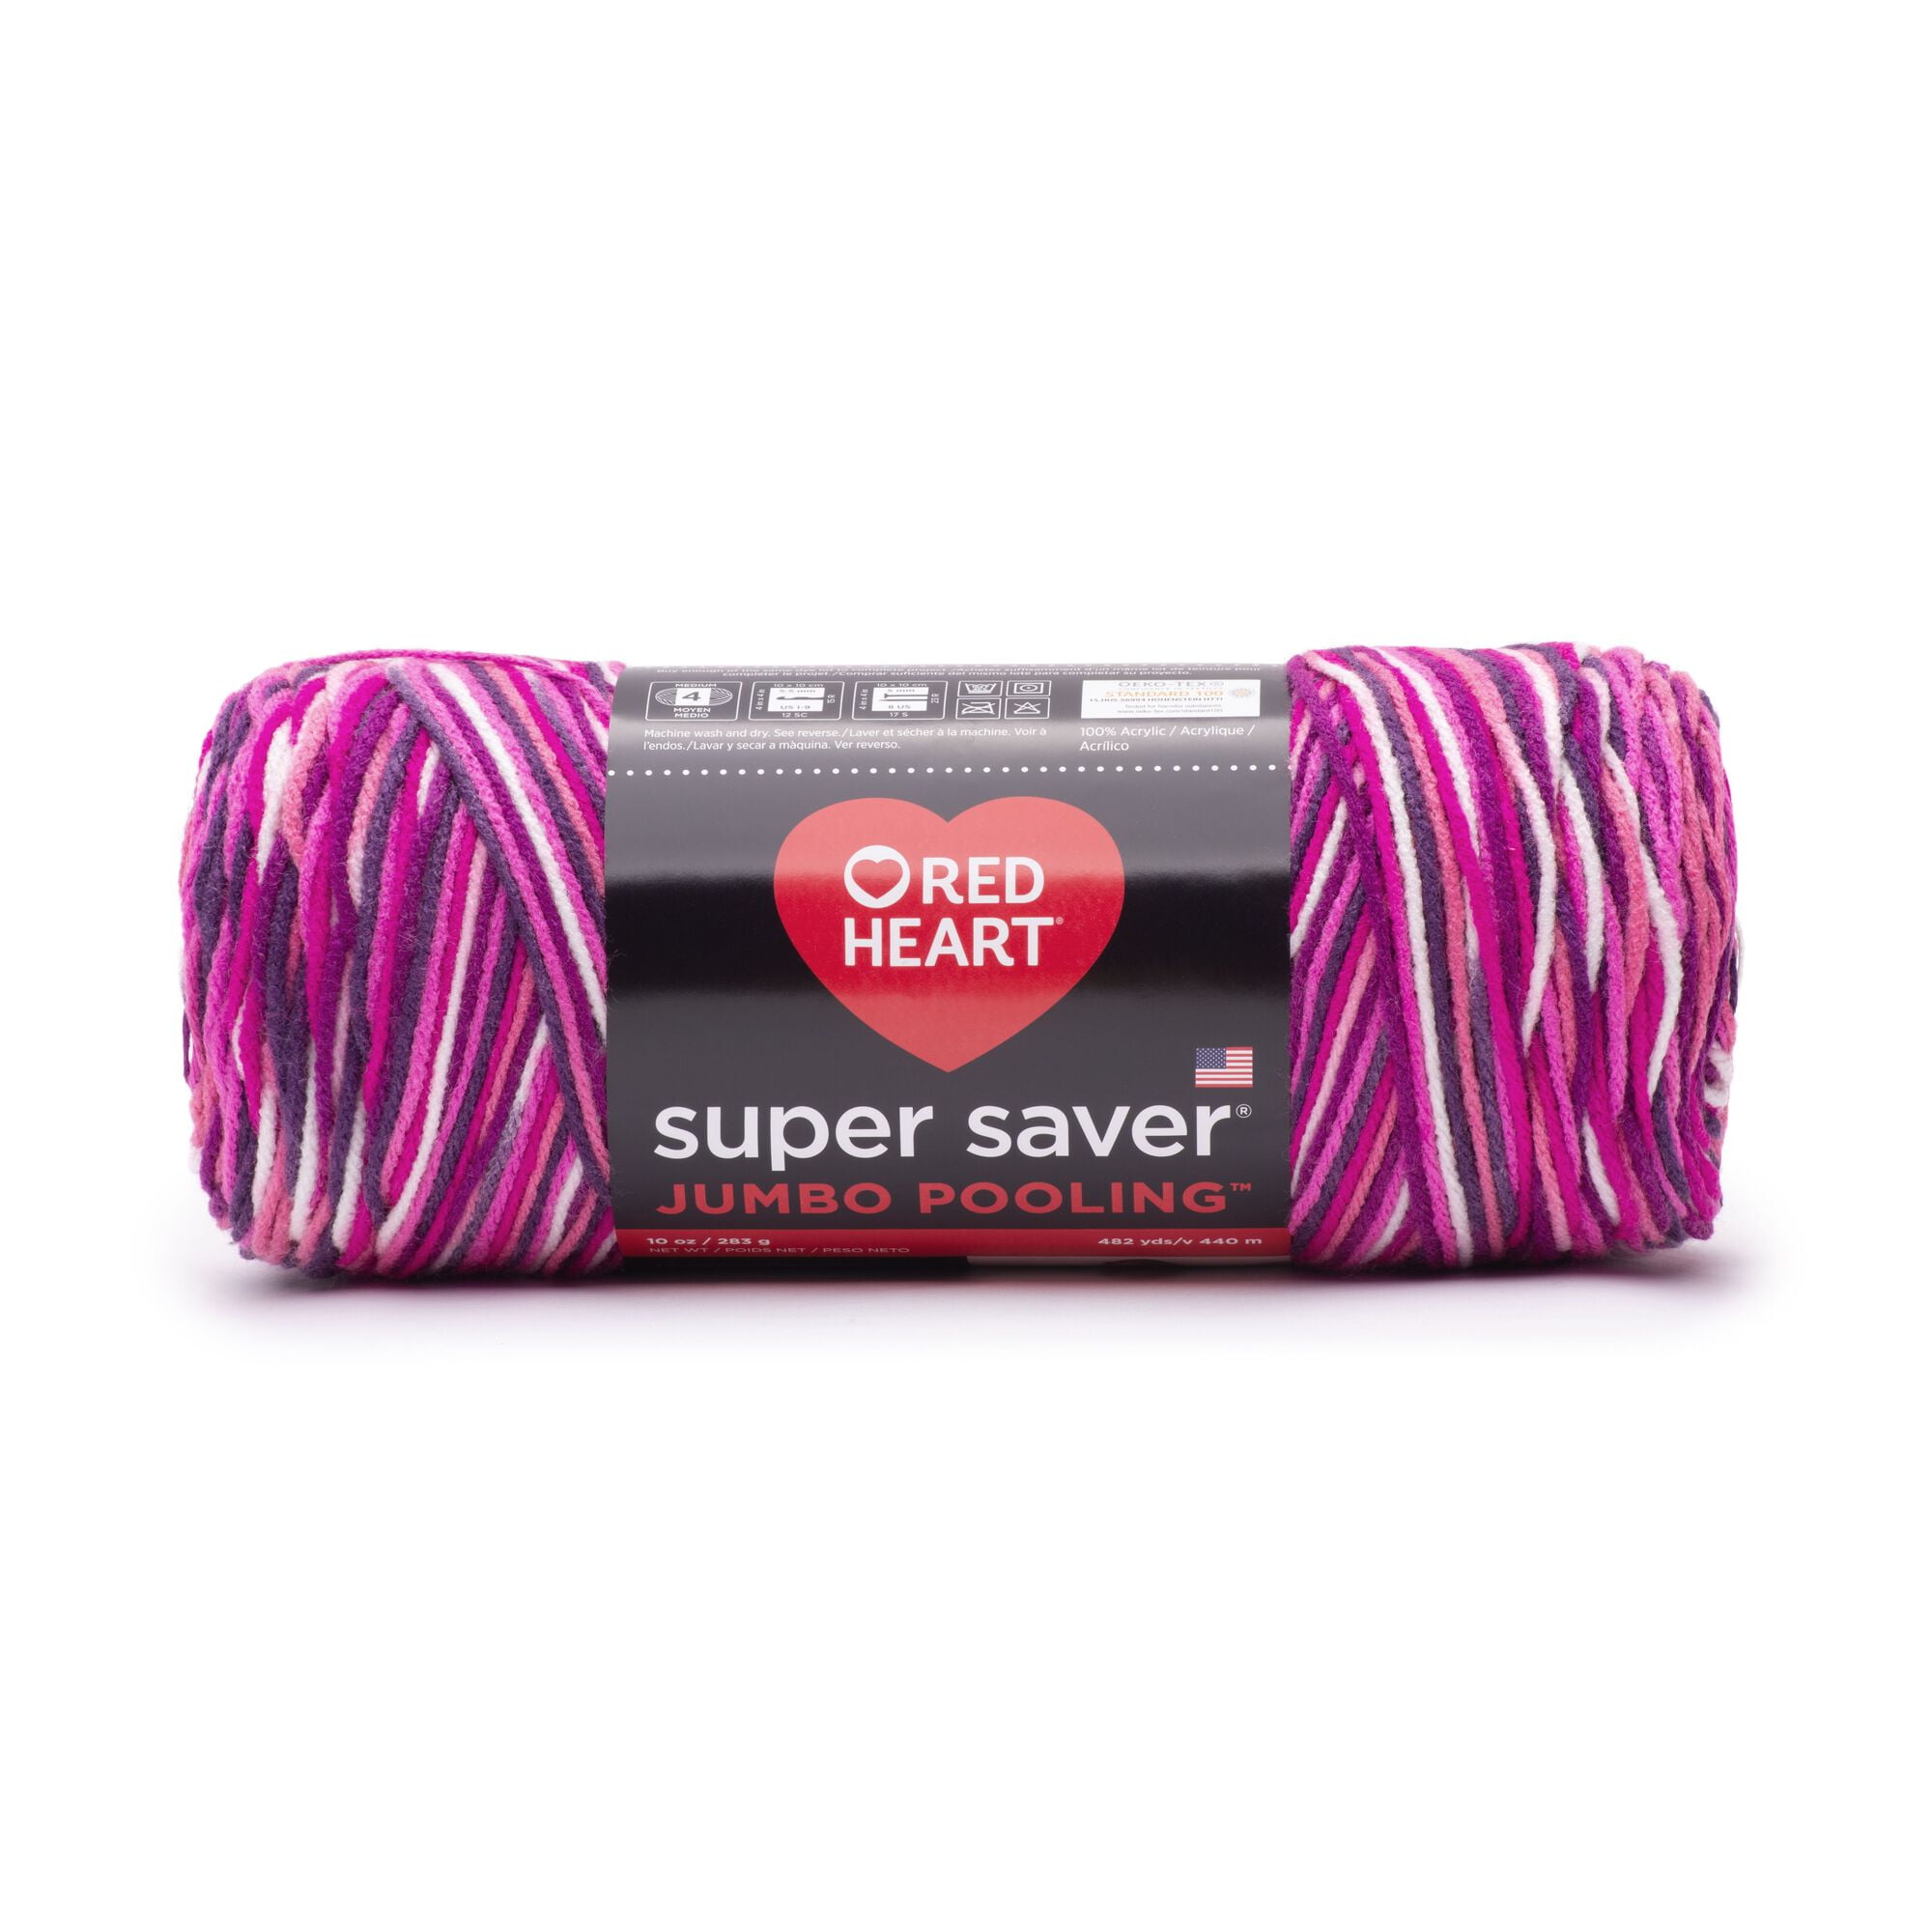 Red Heart Super Saver 6pk Worsted Weight Yarn - Zebra - Red Heart Yarn - Yarn & Needlecrafts